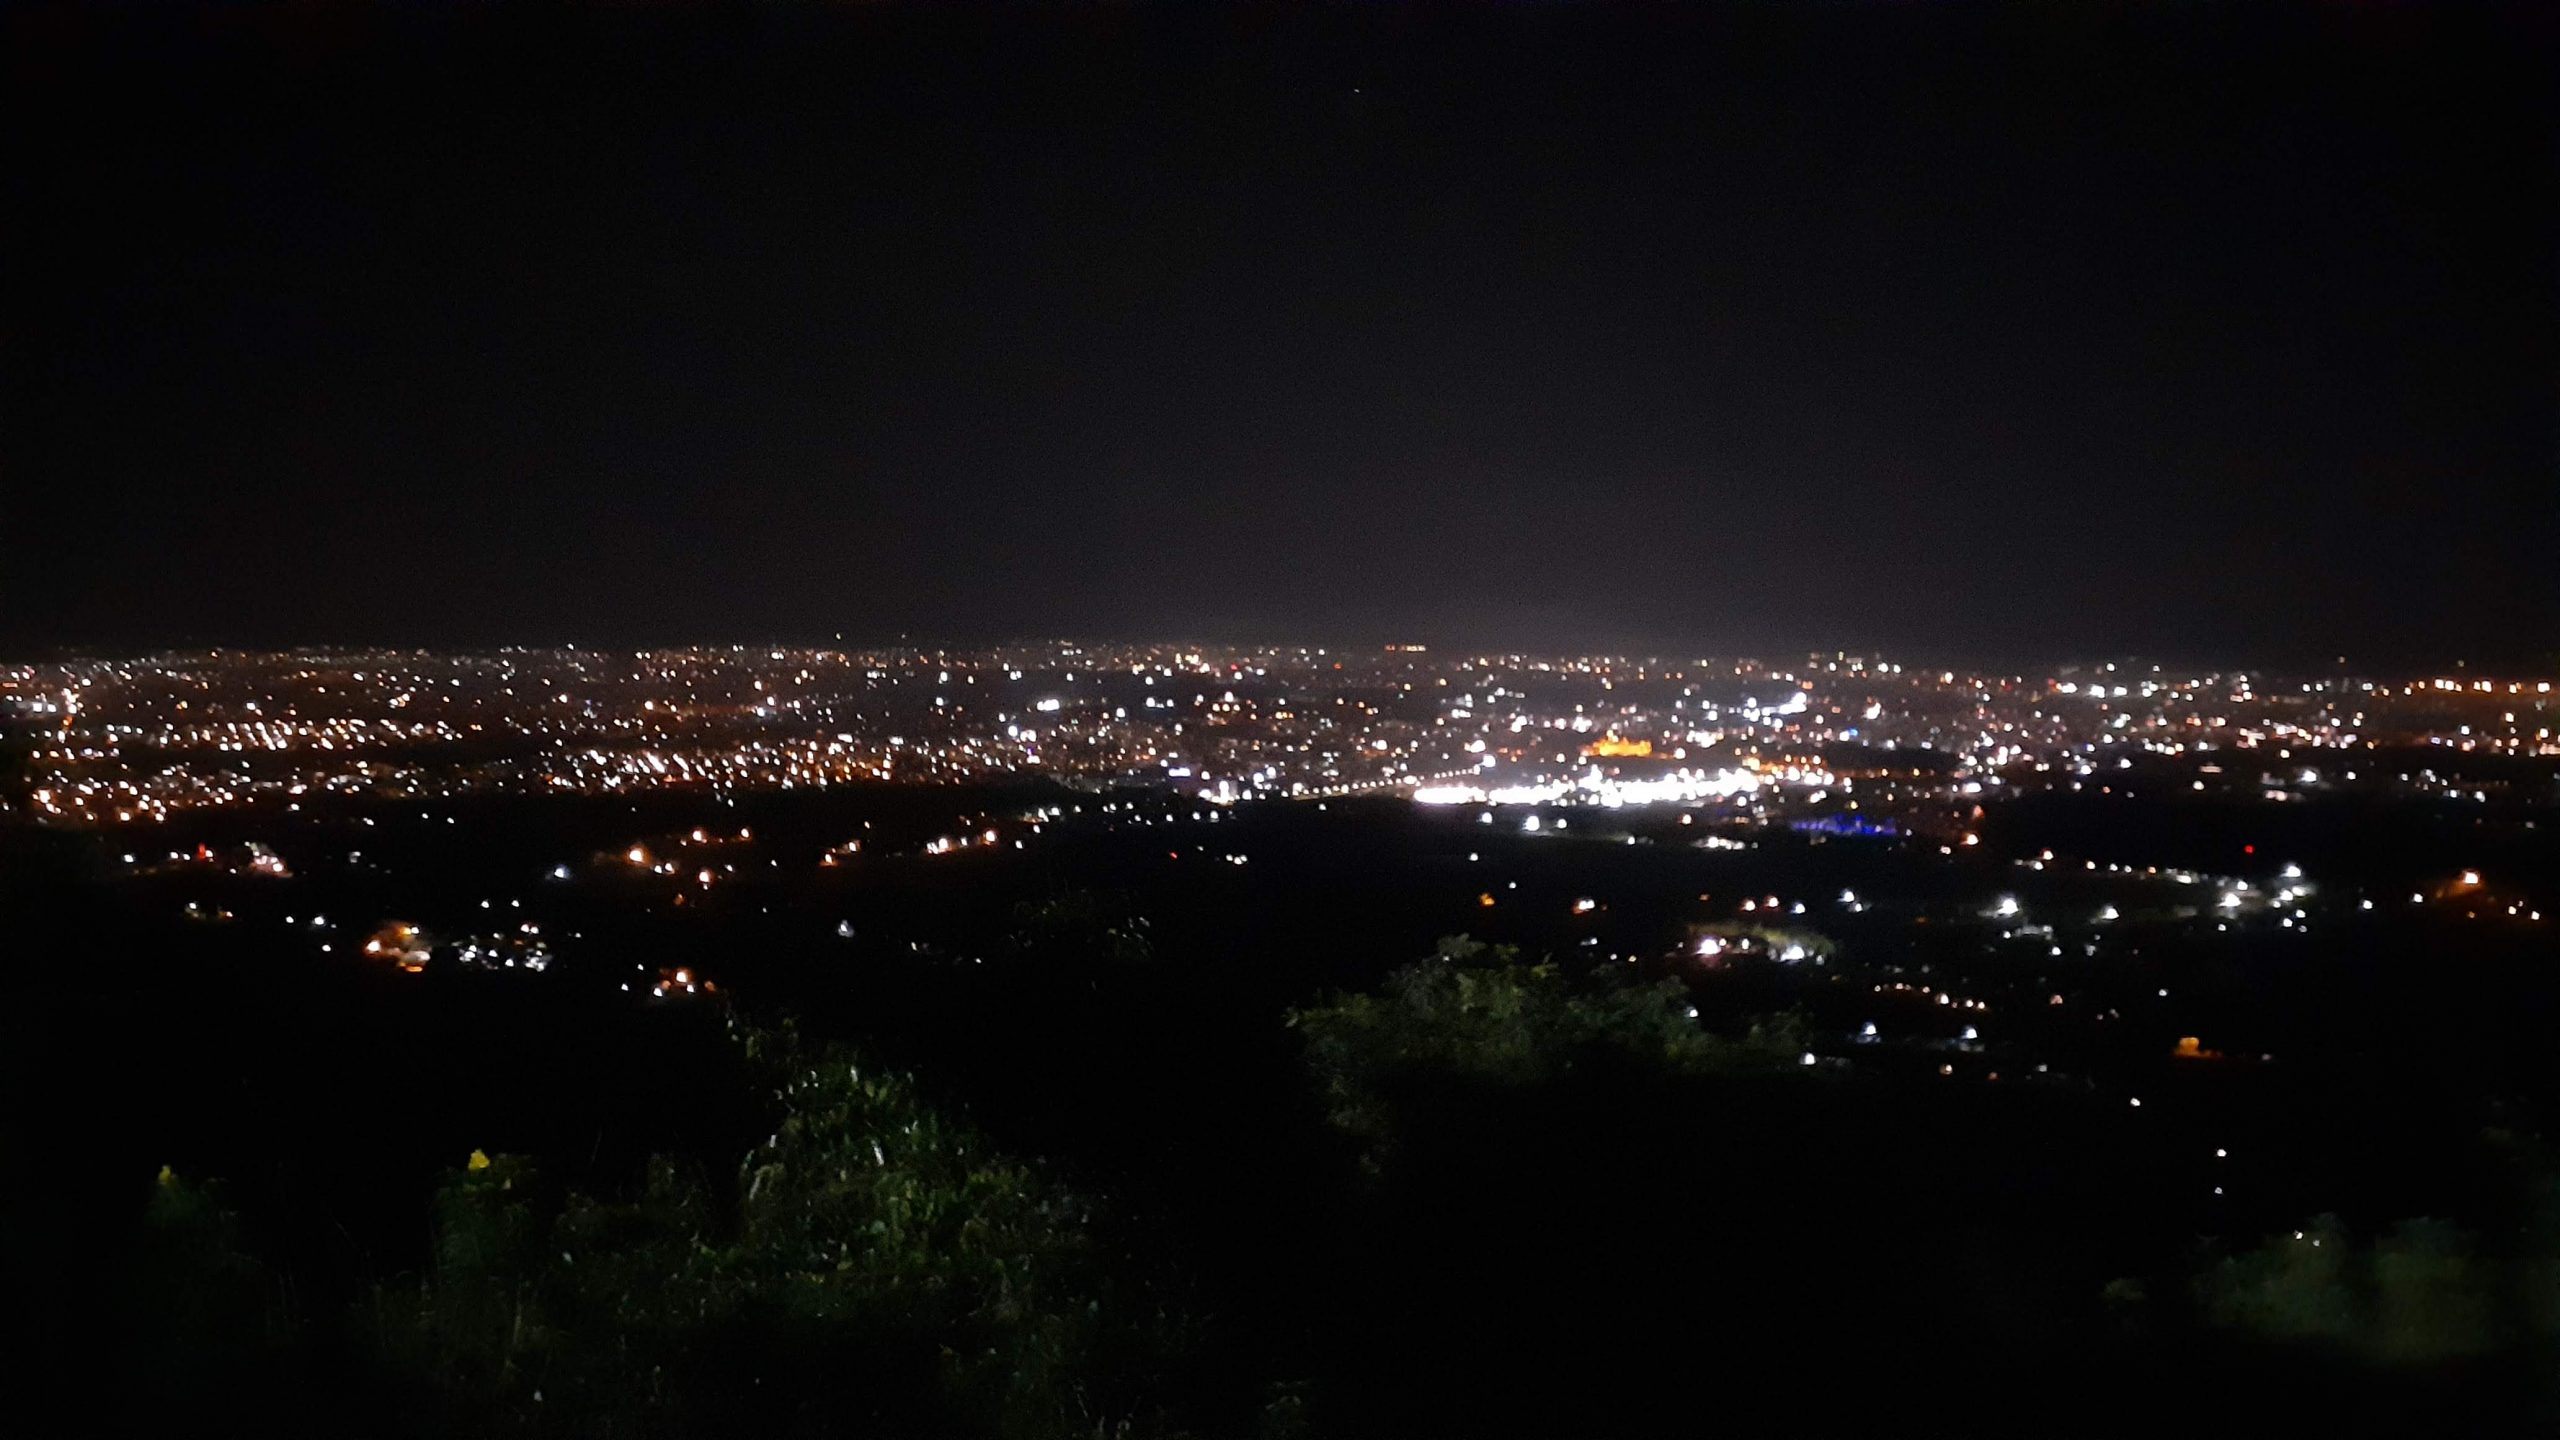 View of city at night